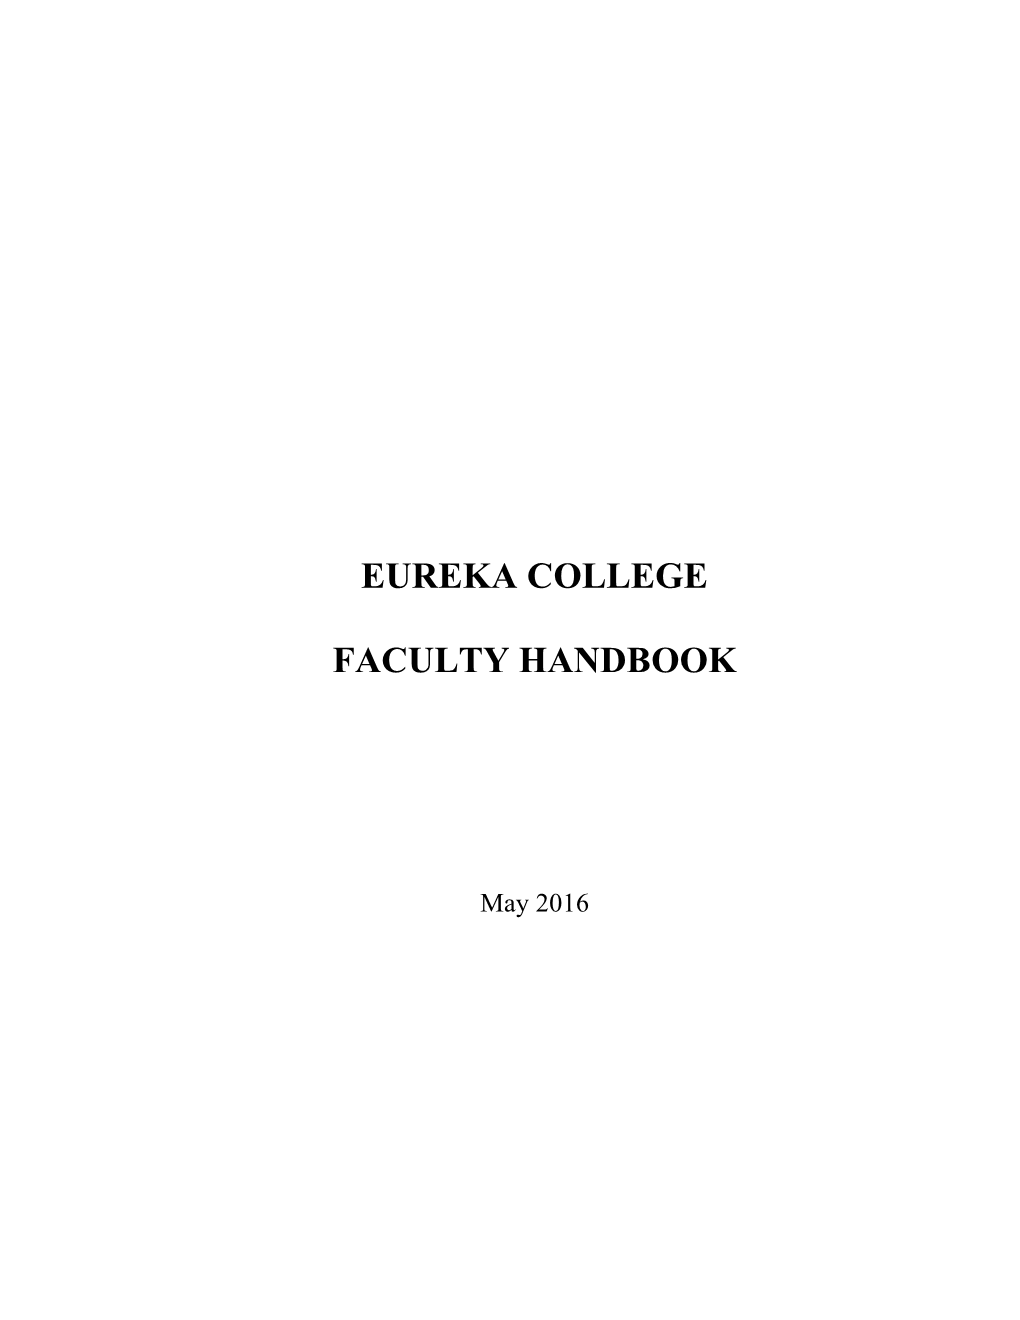 Purpose of the Faculty Handbook